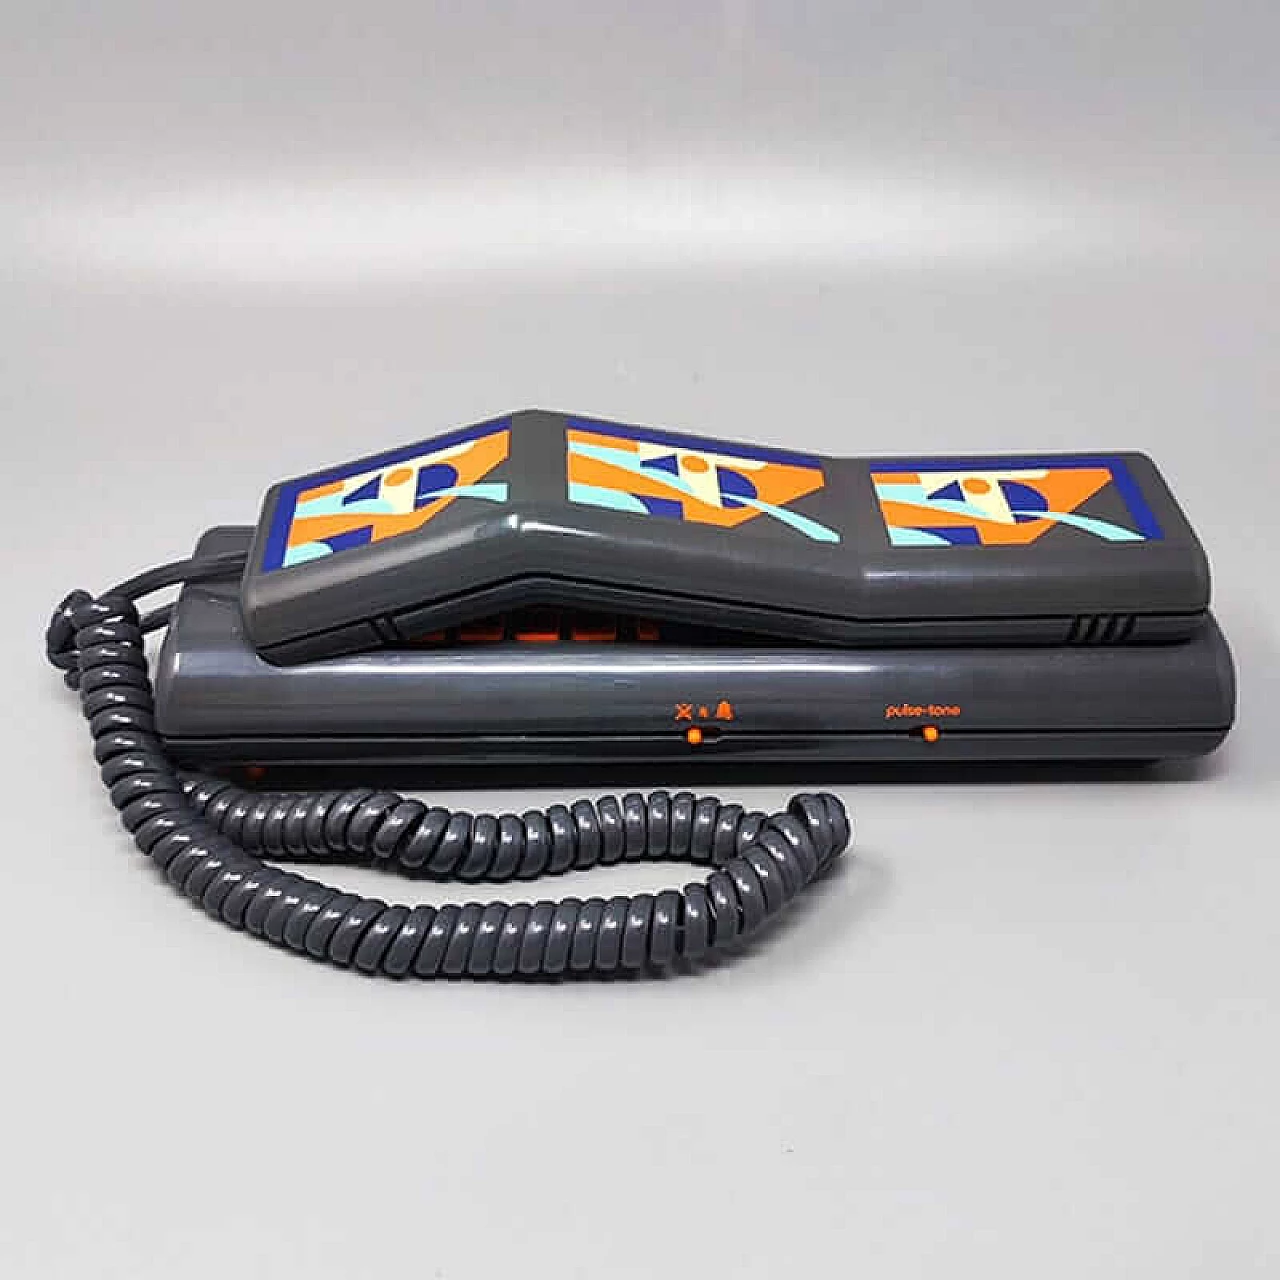 Deco Swatch Twin Phone landline phone, 1980s 2